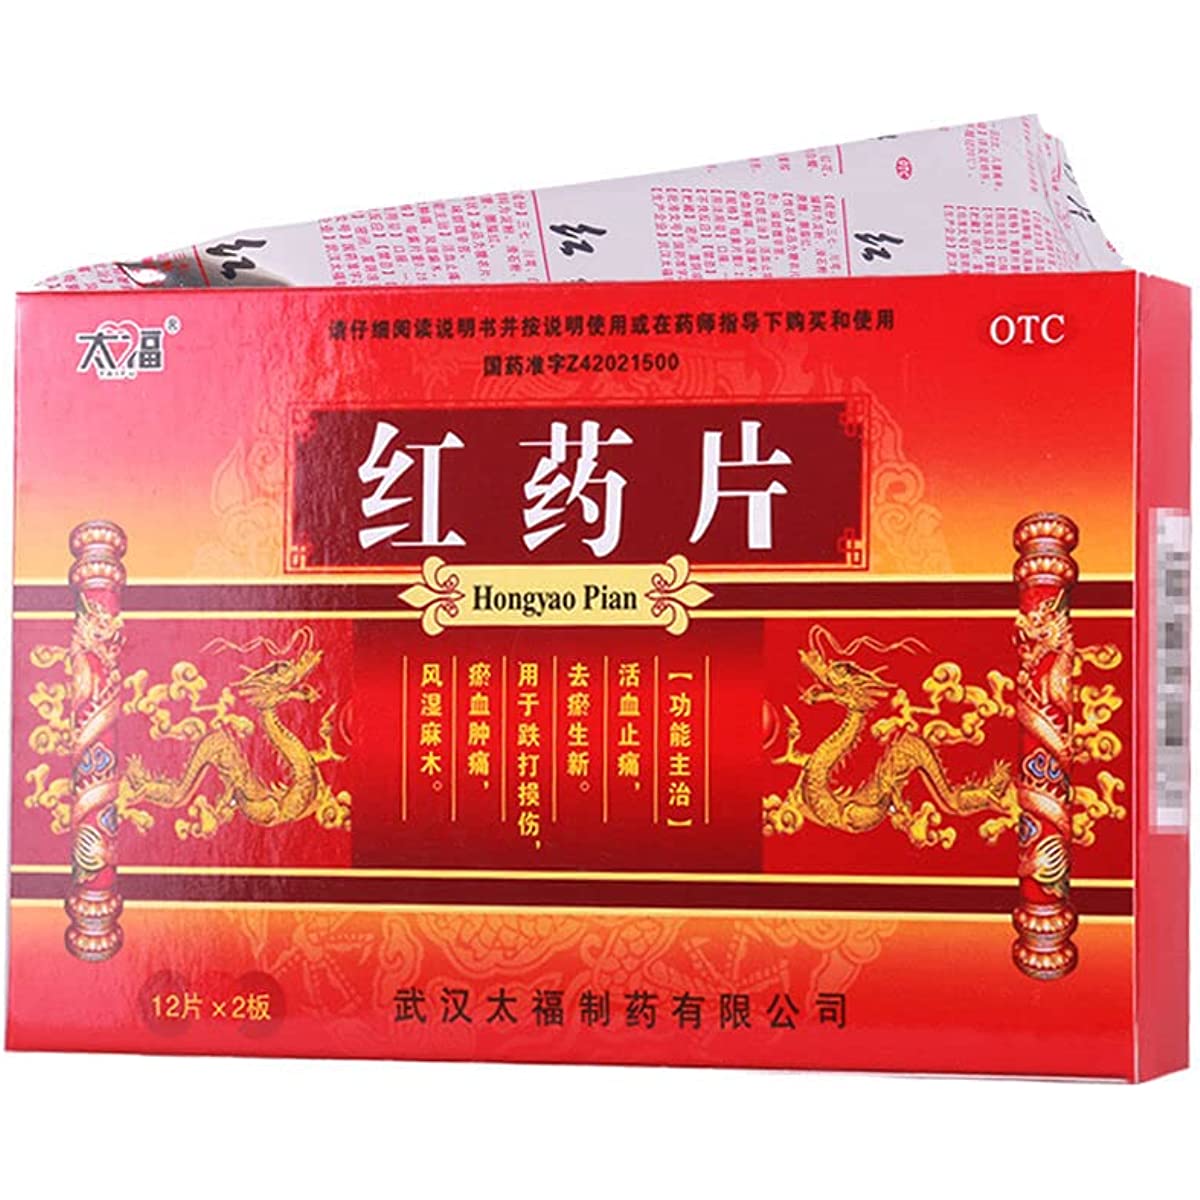 1 Box, Hongyao Pian 24 Tablets / Box 红药片